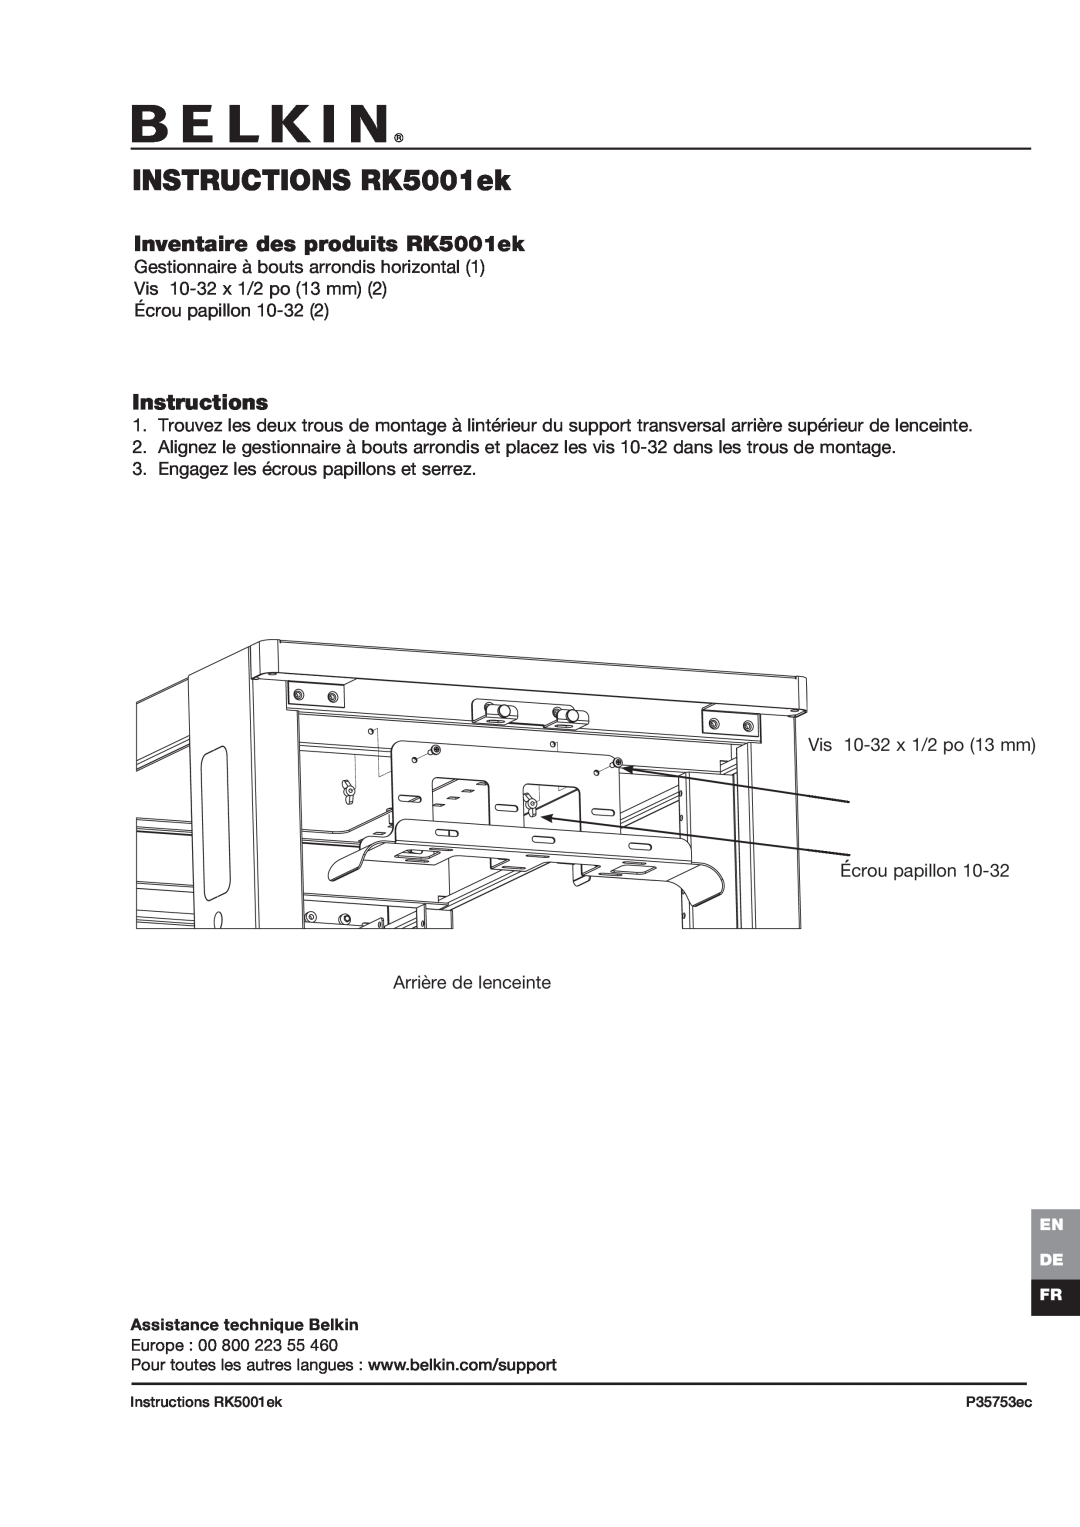 Belkin manual INSTRUCTIONS RK5001ek, Inventaire des produits RK5001ek, Instructions 